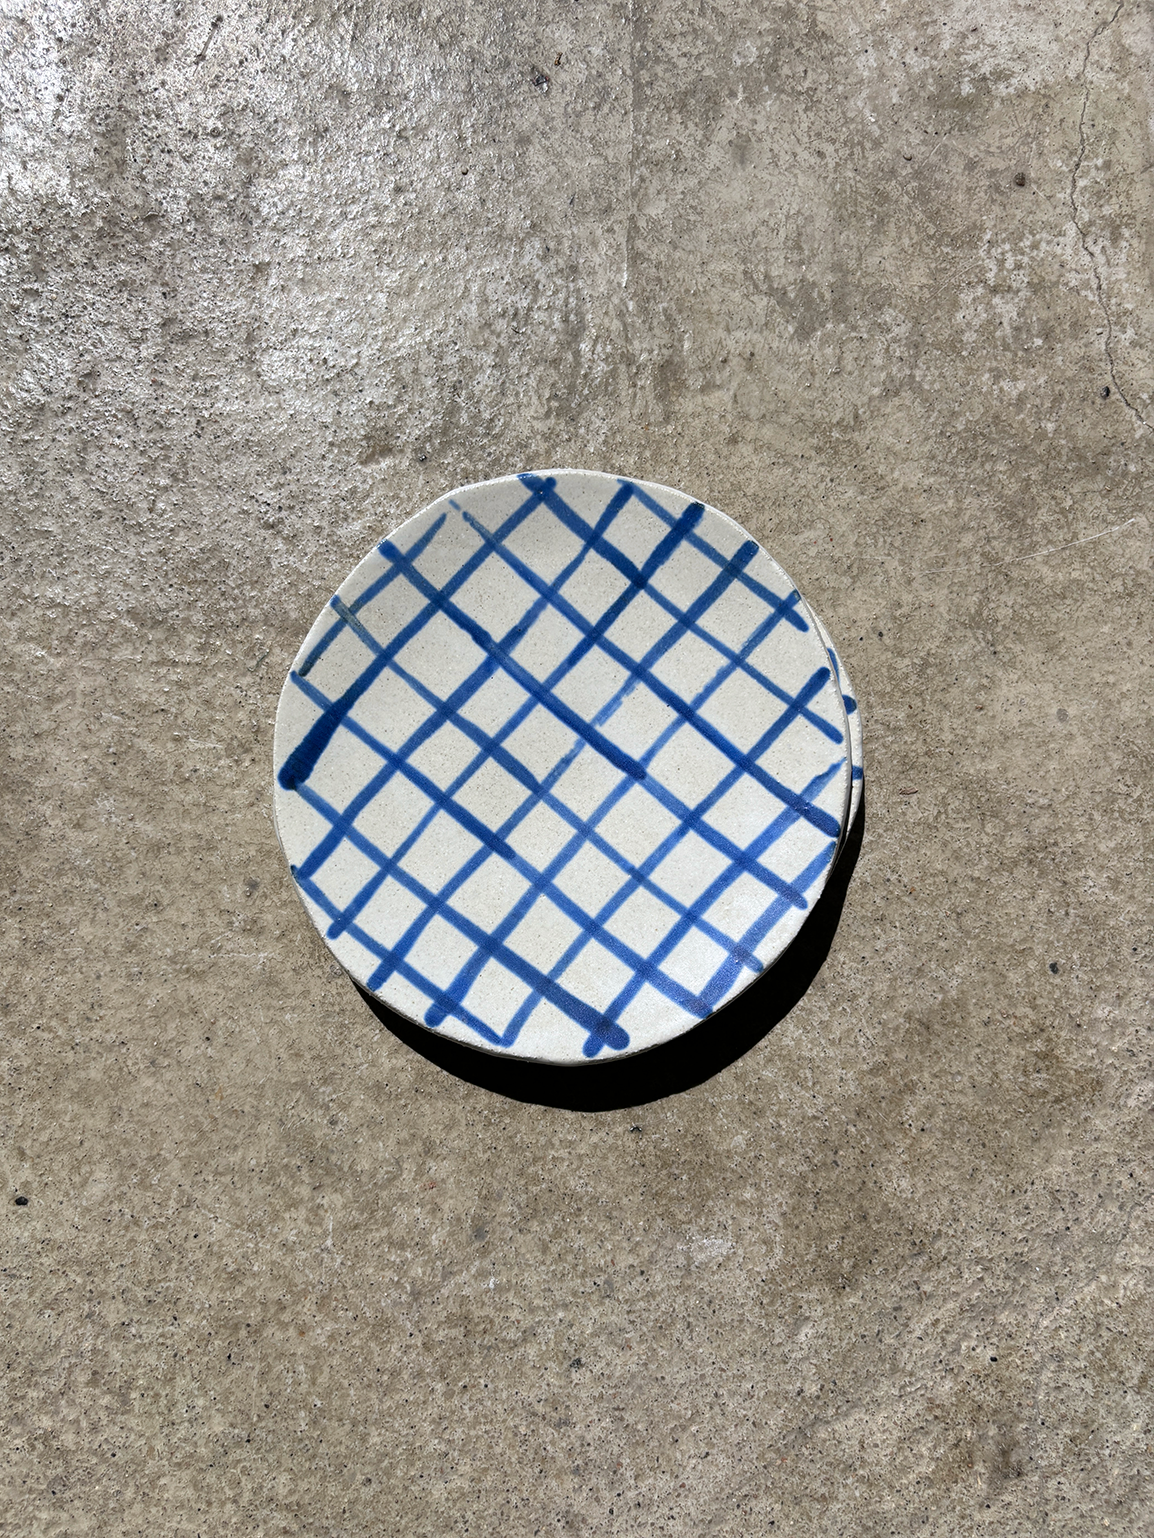 Medium Blue Checkered Plate